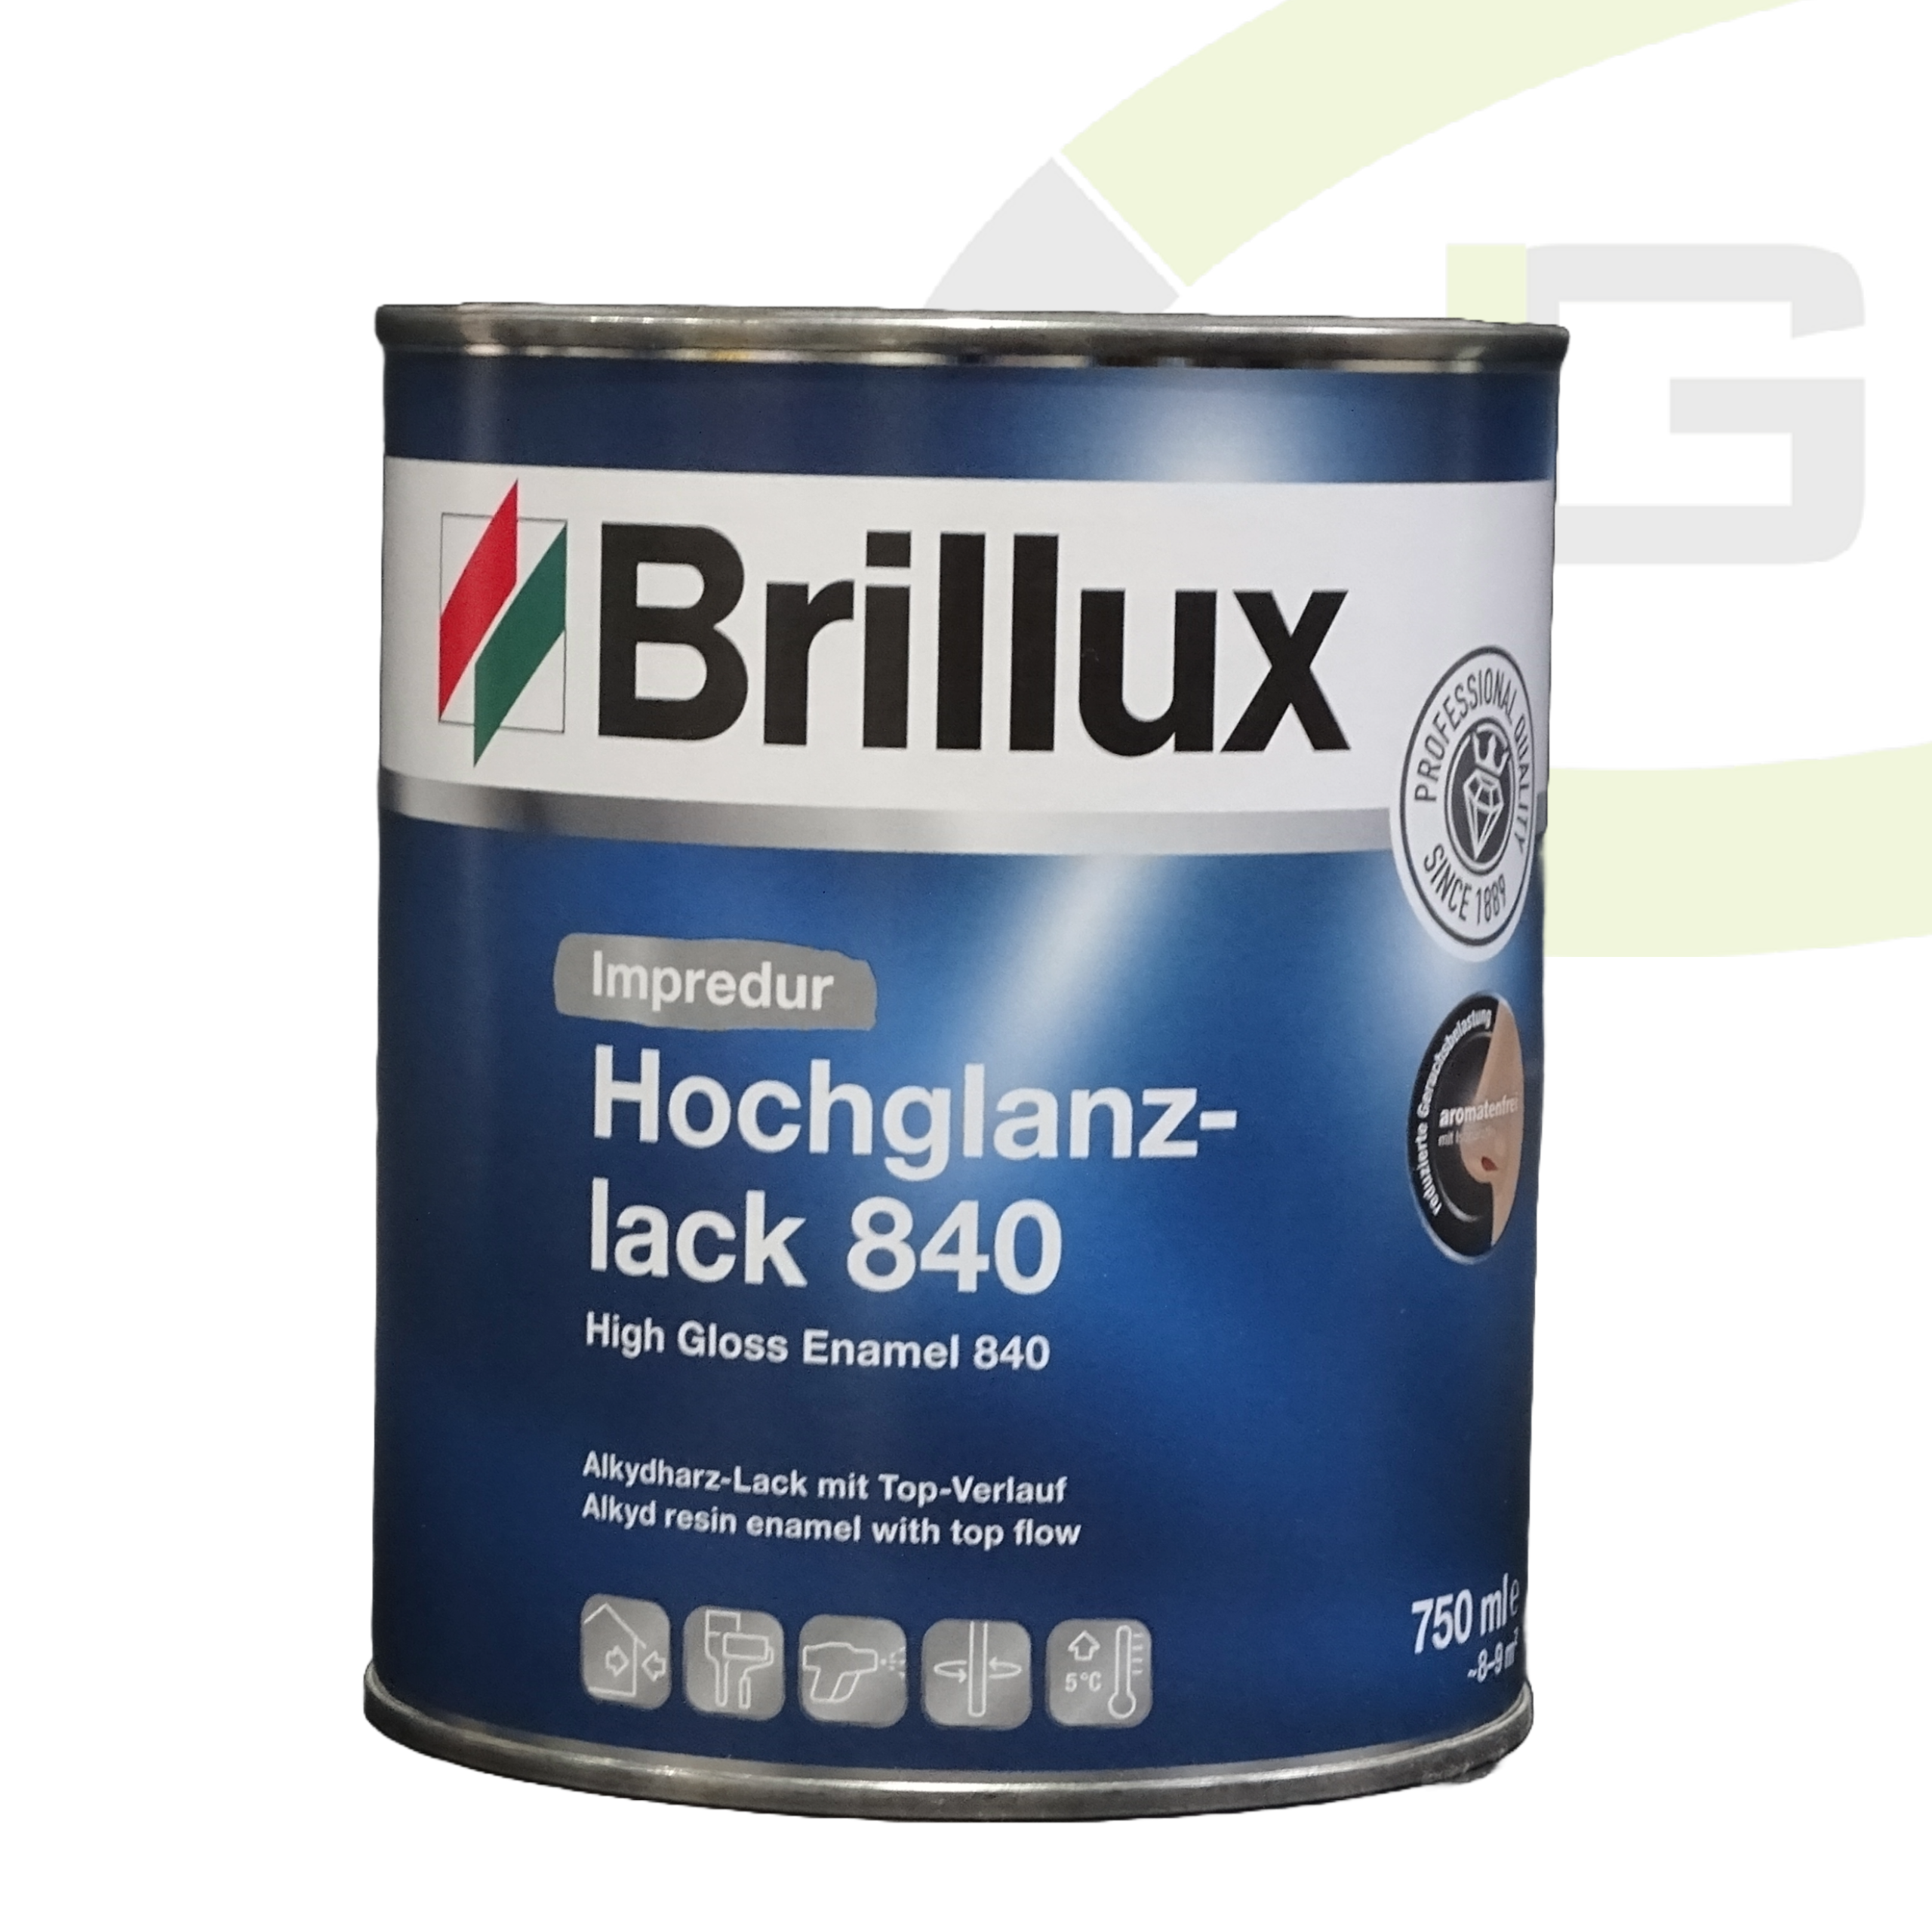 Brillux Impredur Hochglanzlack 840 - 750 ml / Lösungsmittelhaltiger Endlack